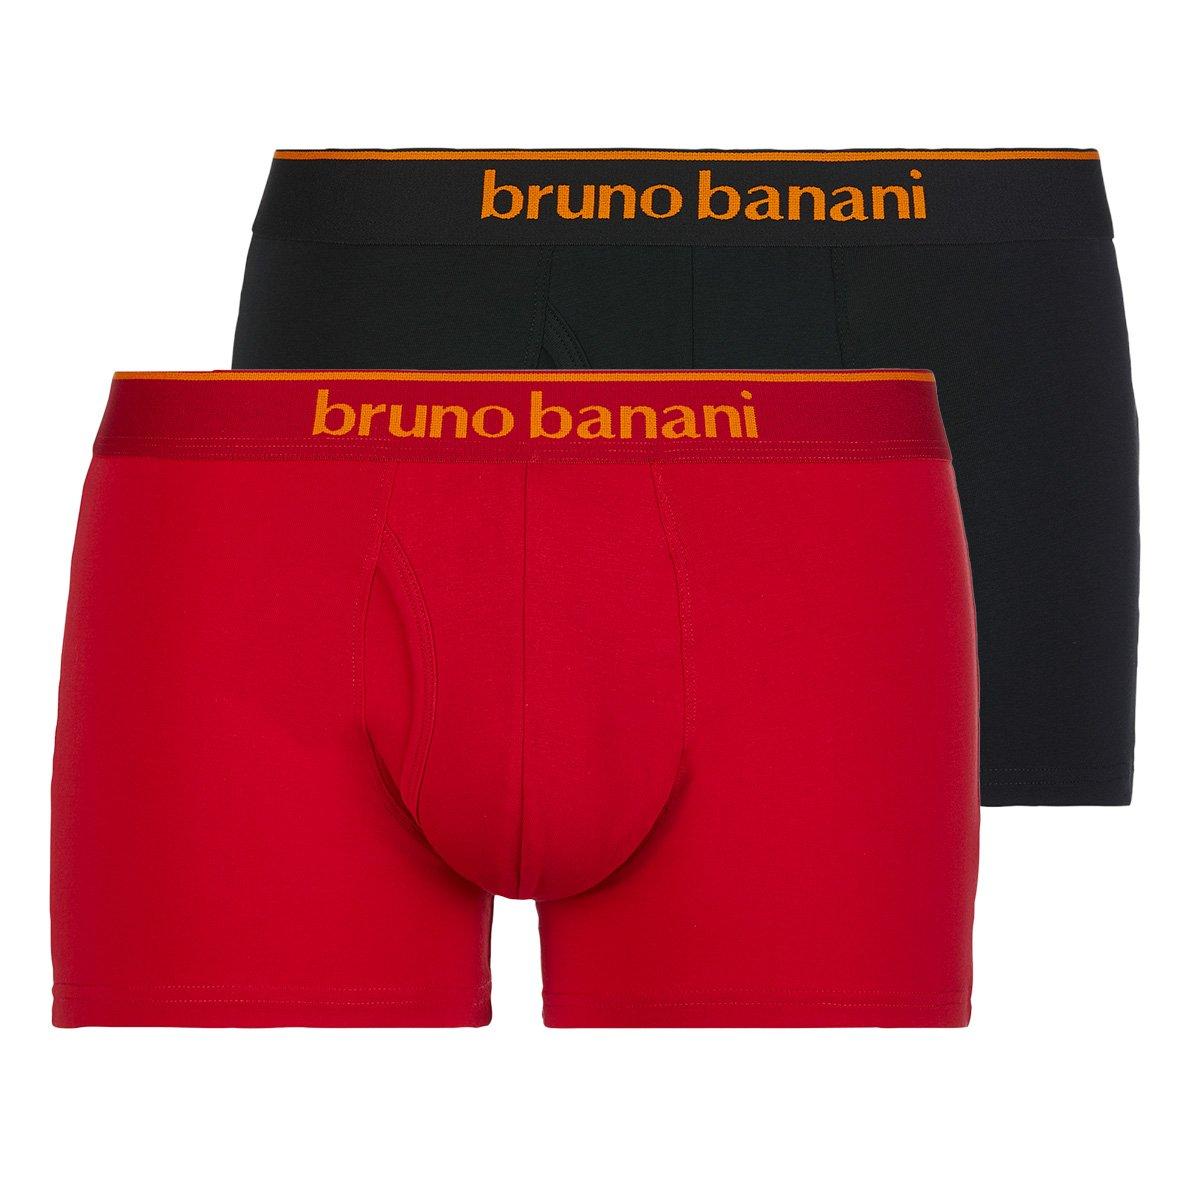 bruno banani  Quick Access lot de 2 - boxers 